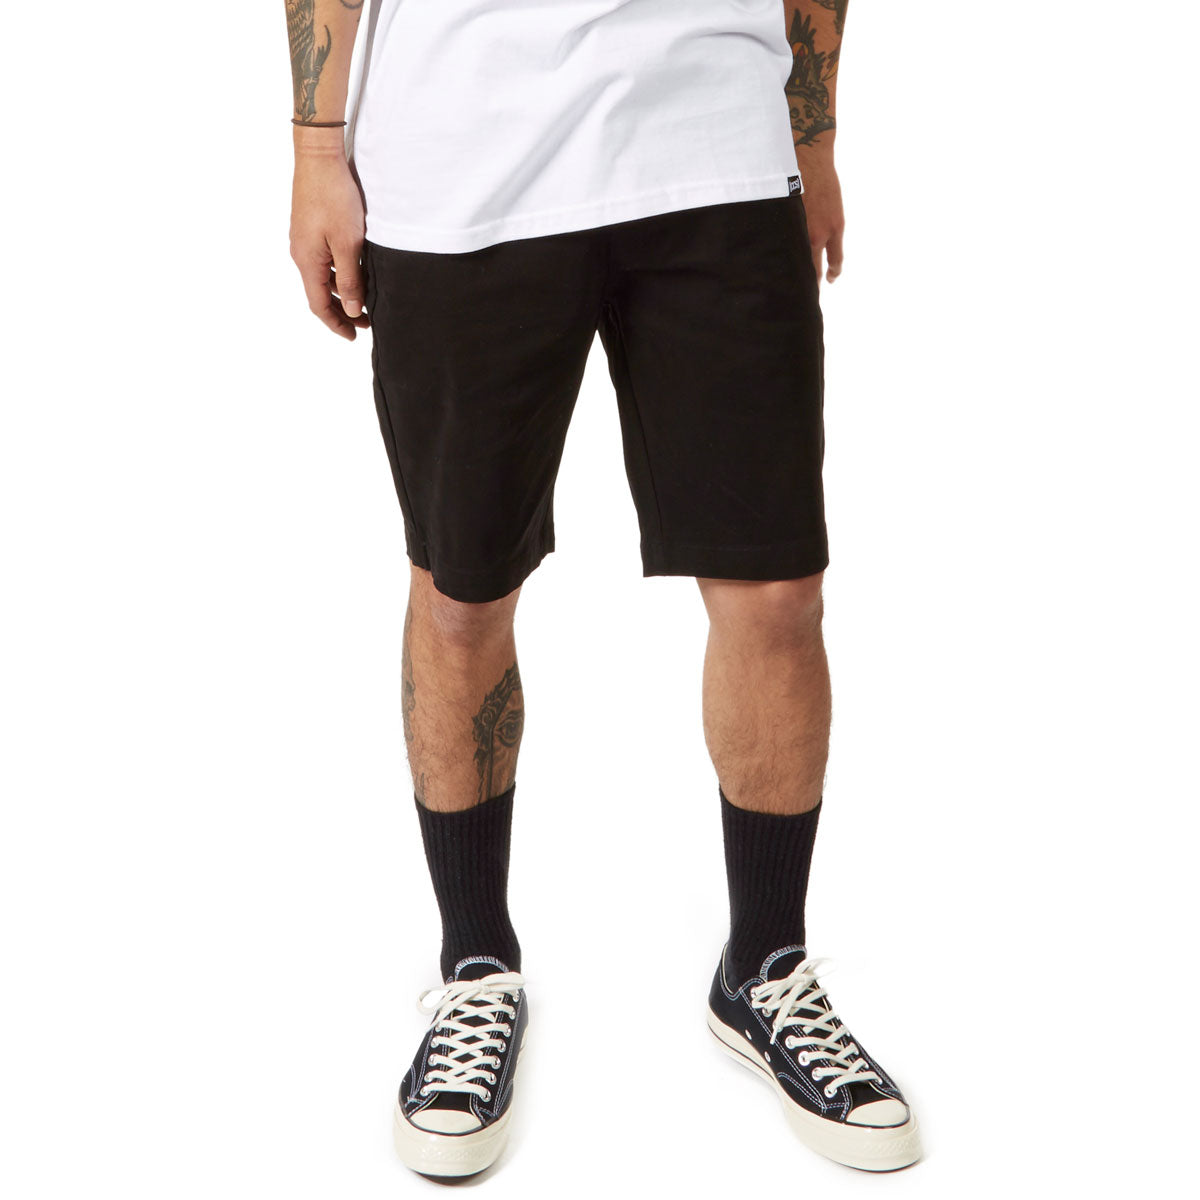 CCS Standard Plus Chino Shorts - Black image 1